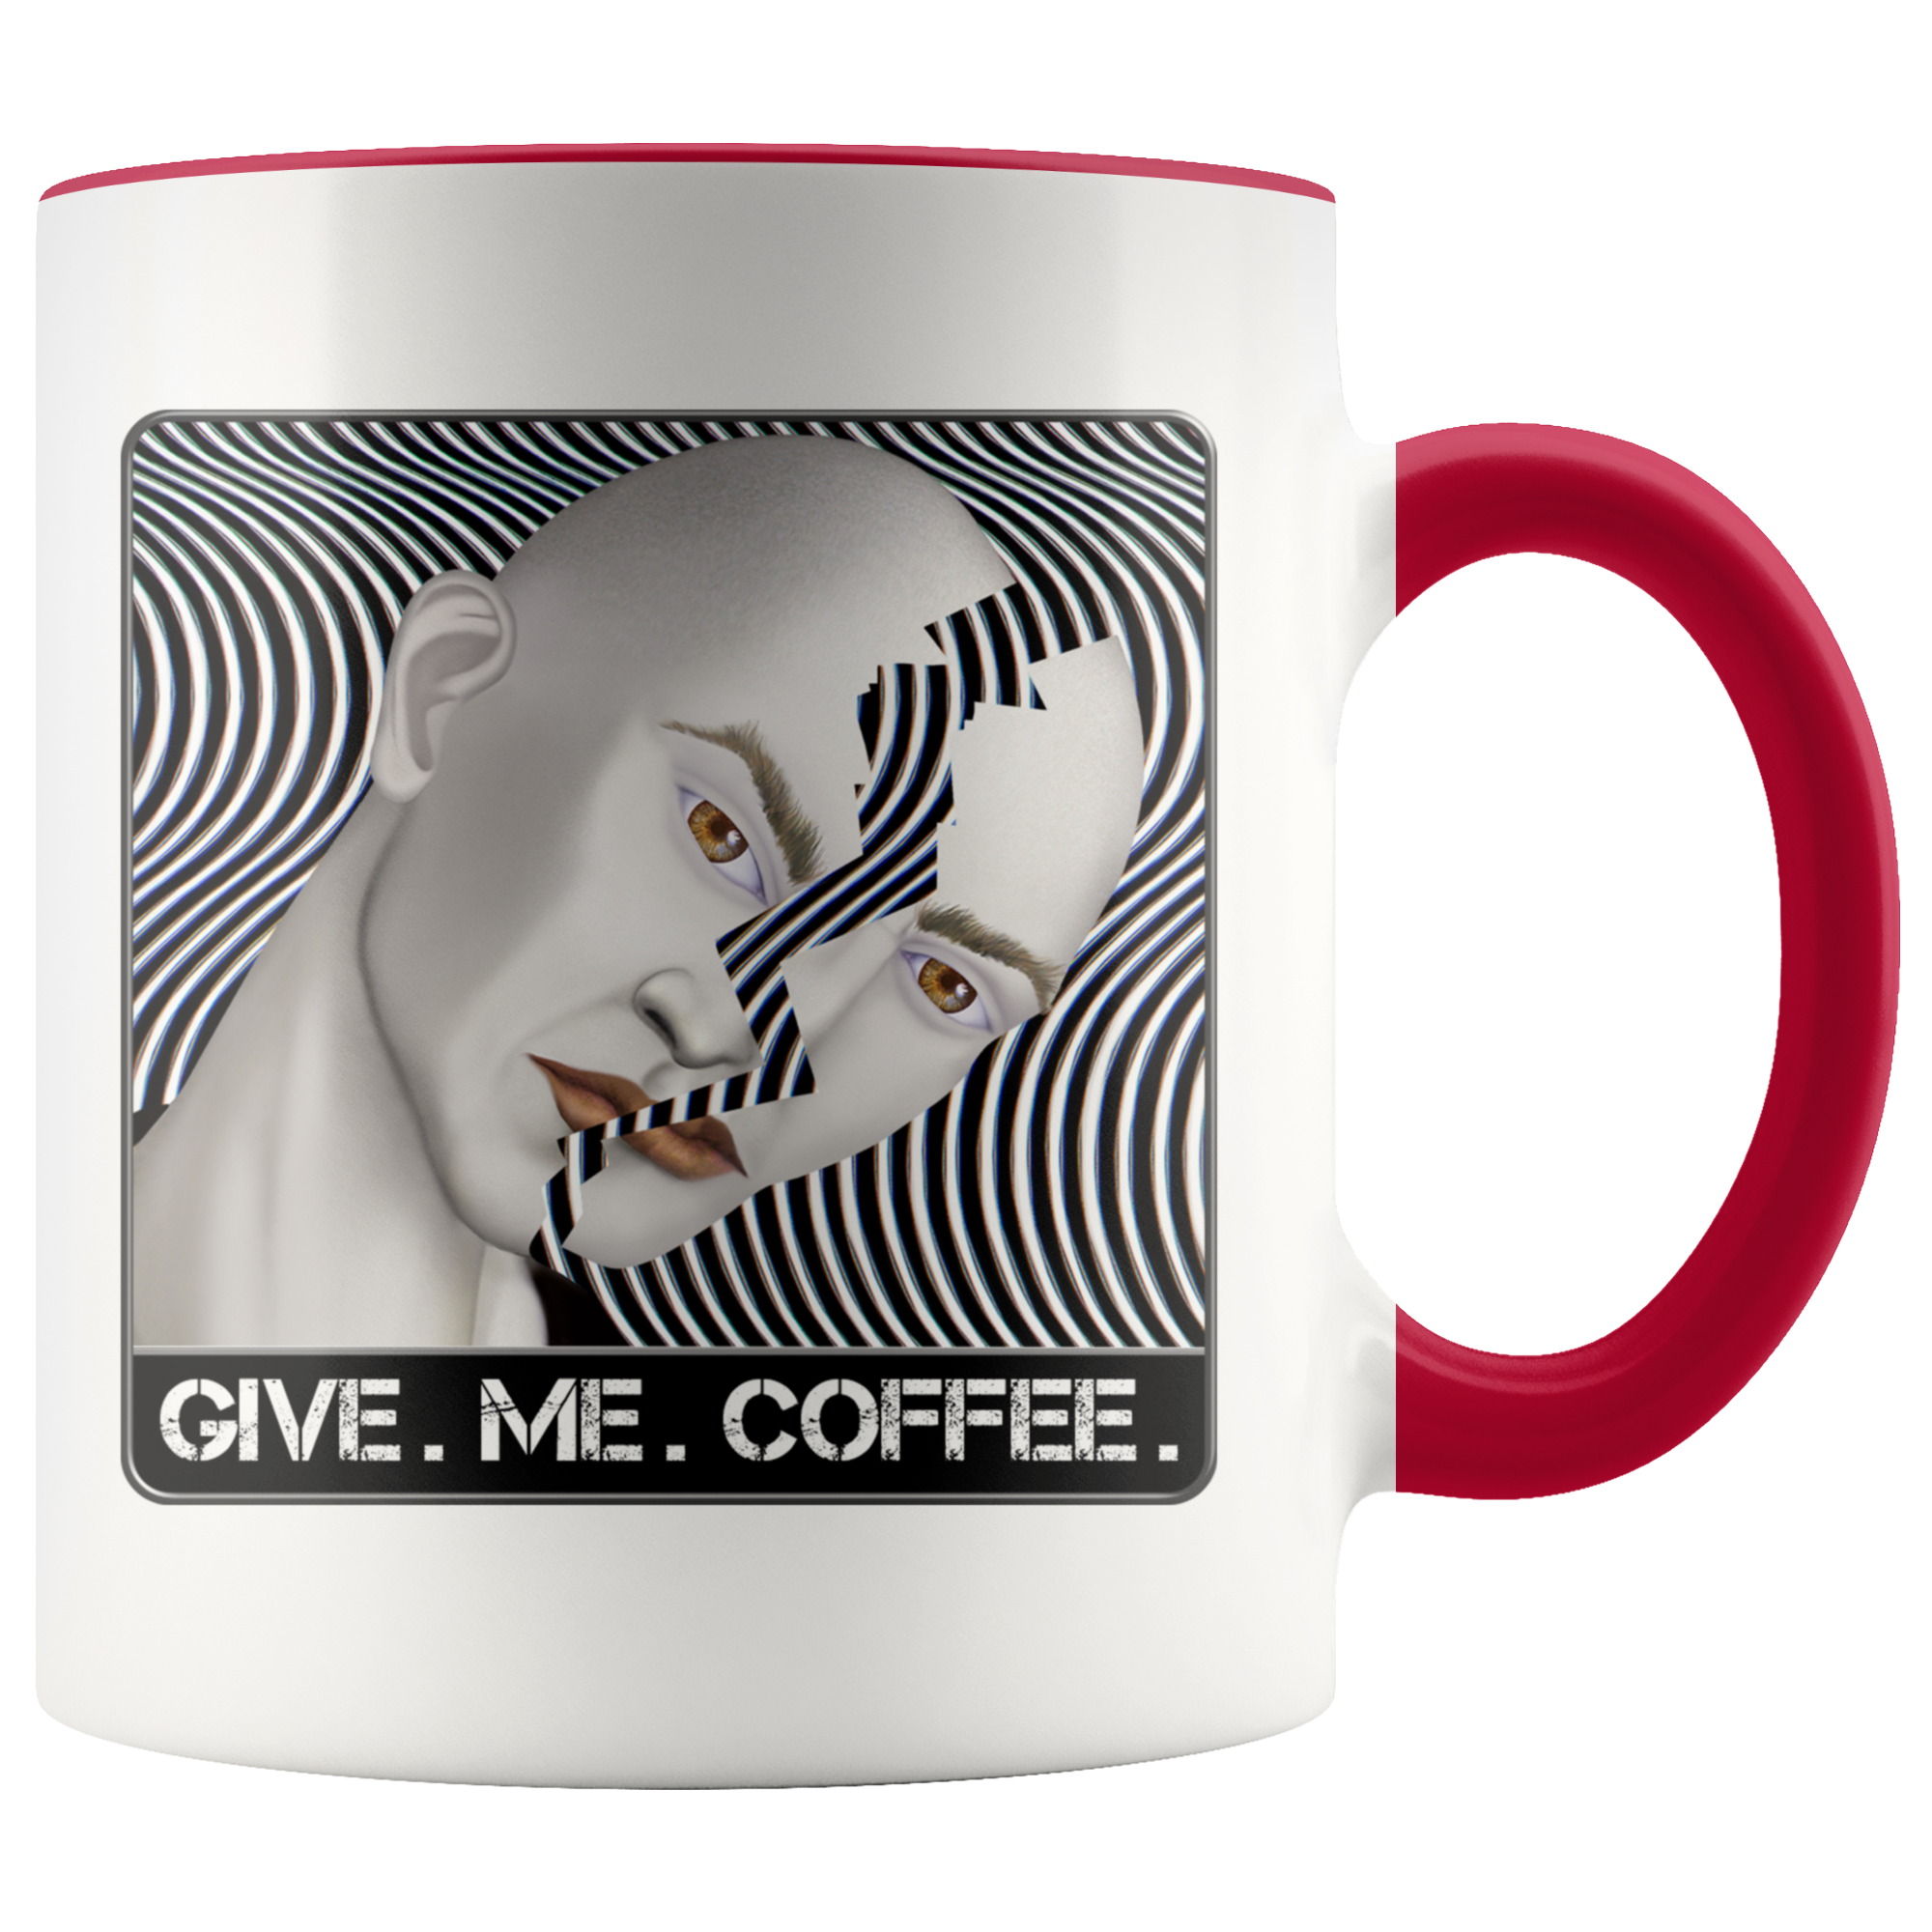 GIVE. ME. COFFEE. - 11 Oz. Color Accent Mug